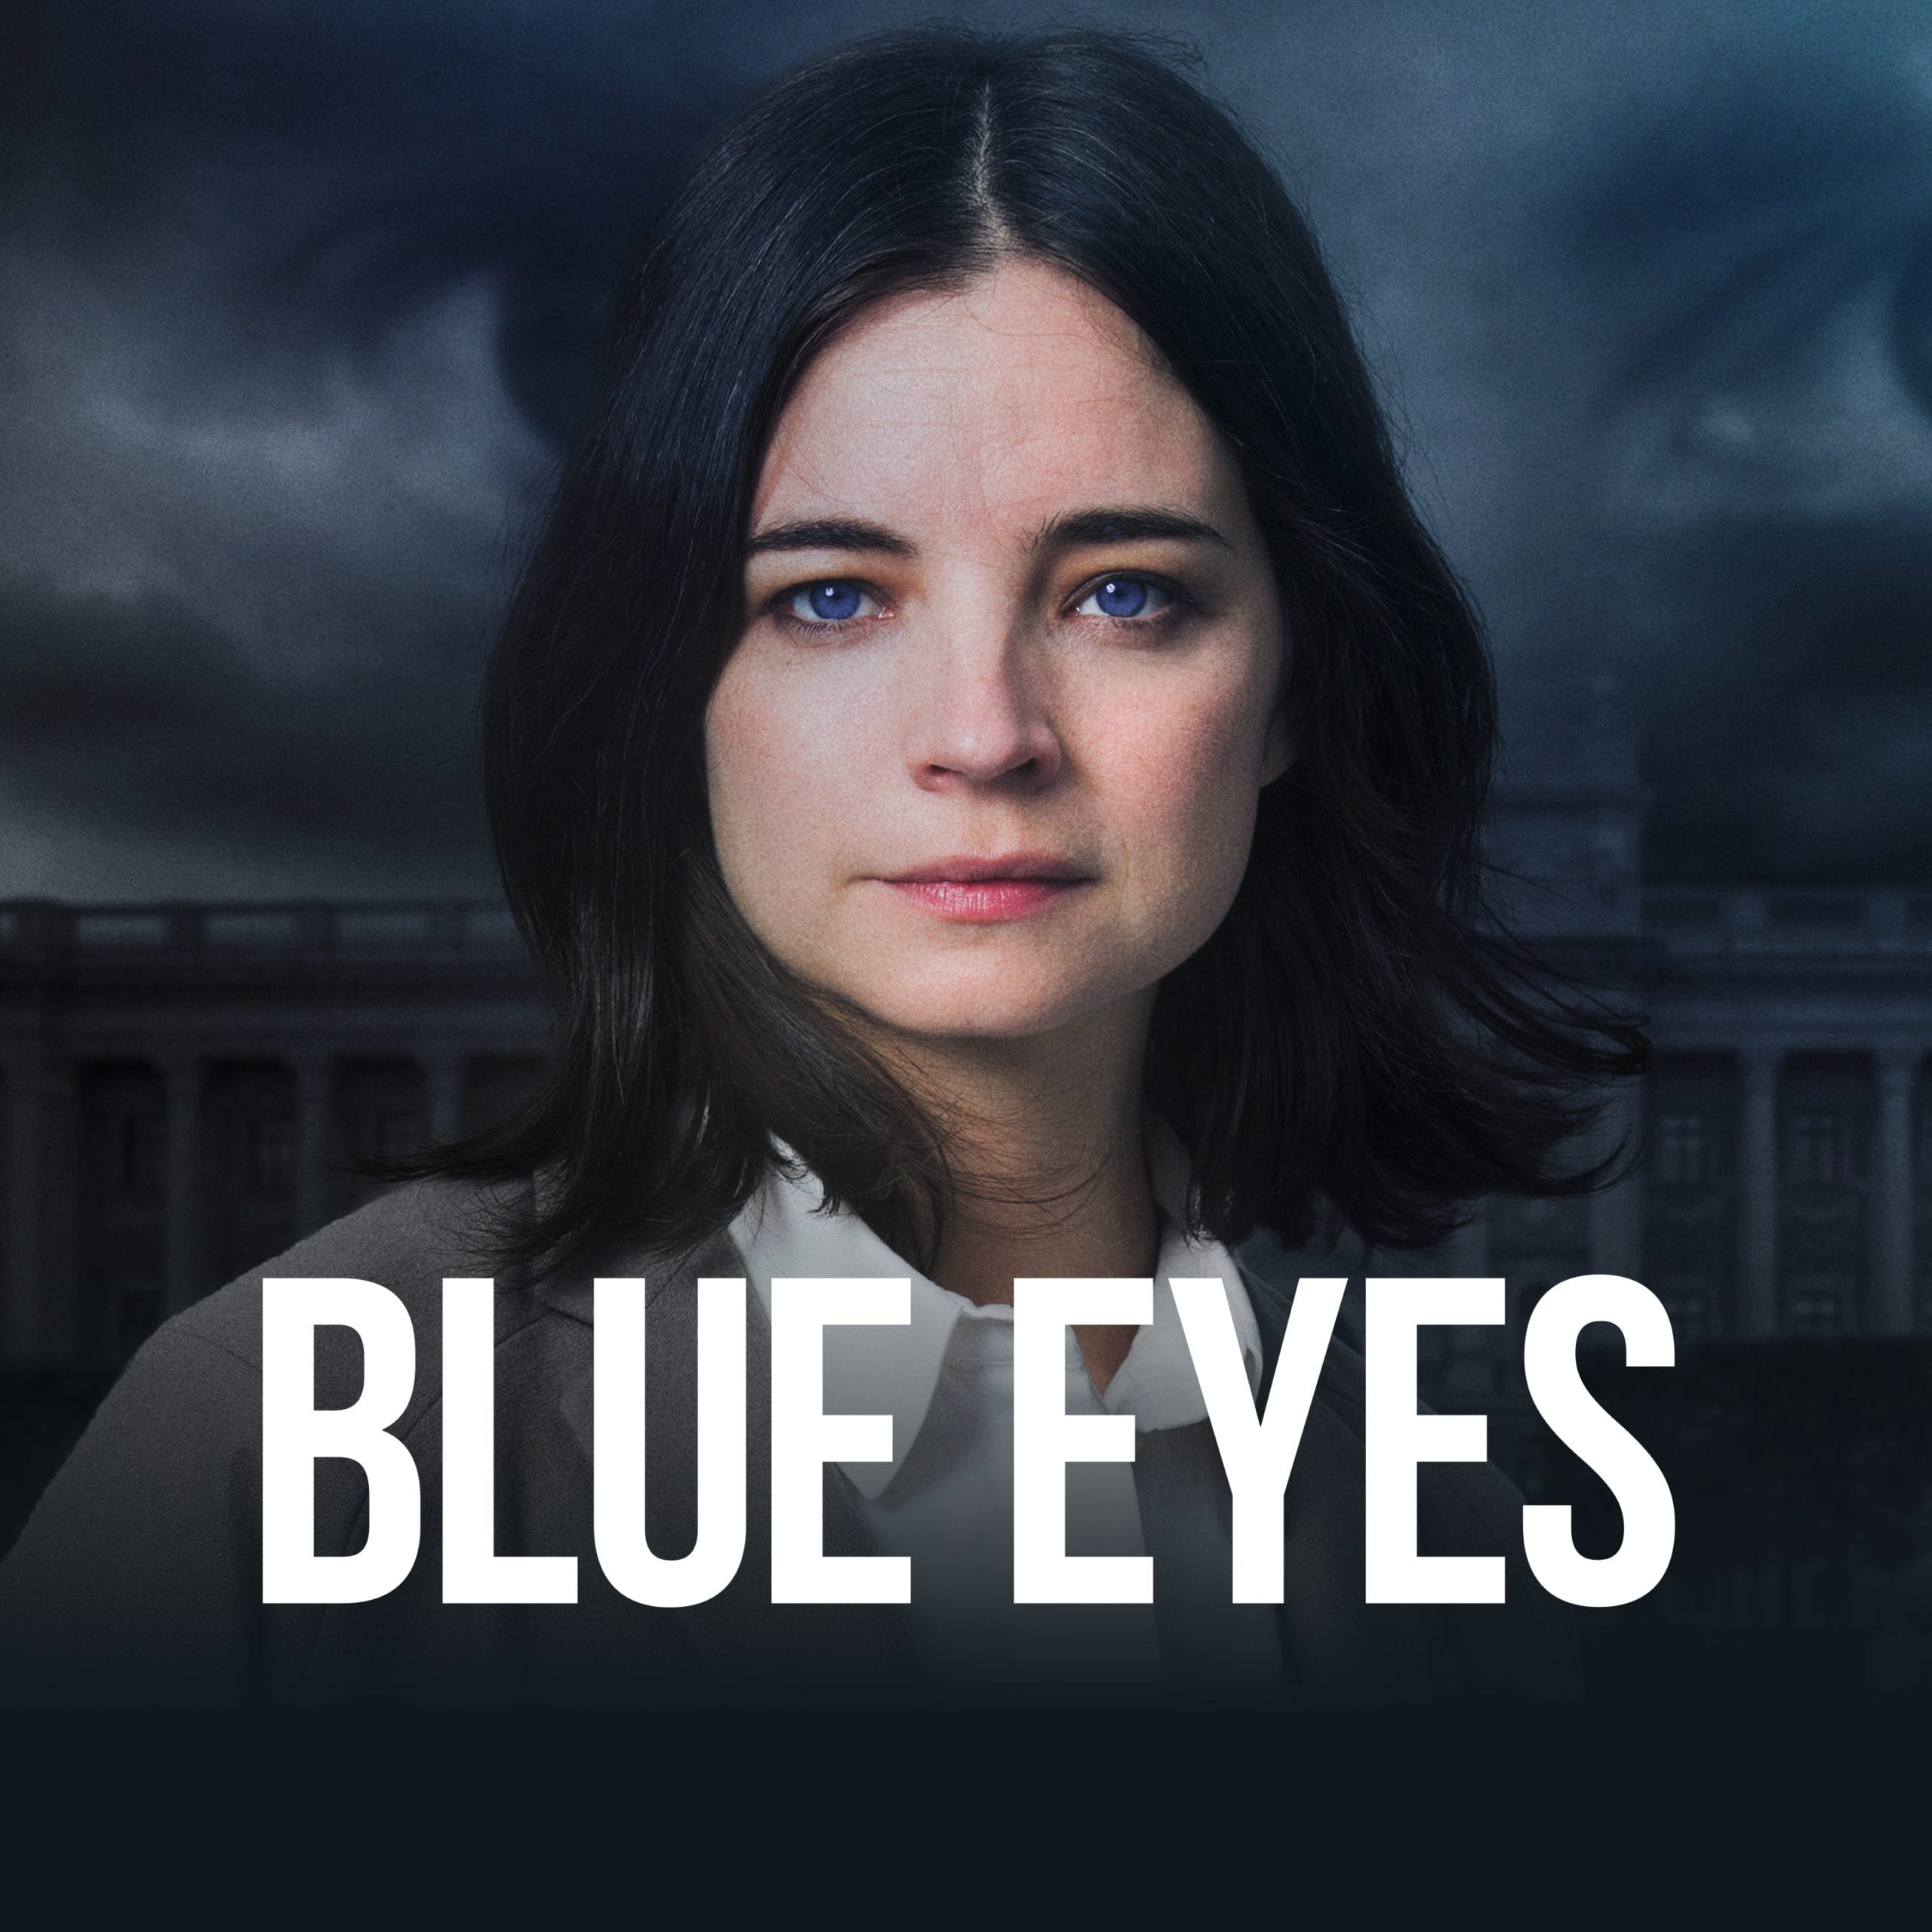 blue eyes vimeo ott series banner 3000x3000 1 scaled